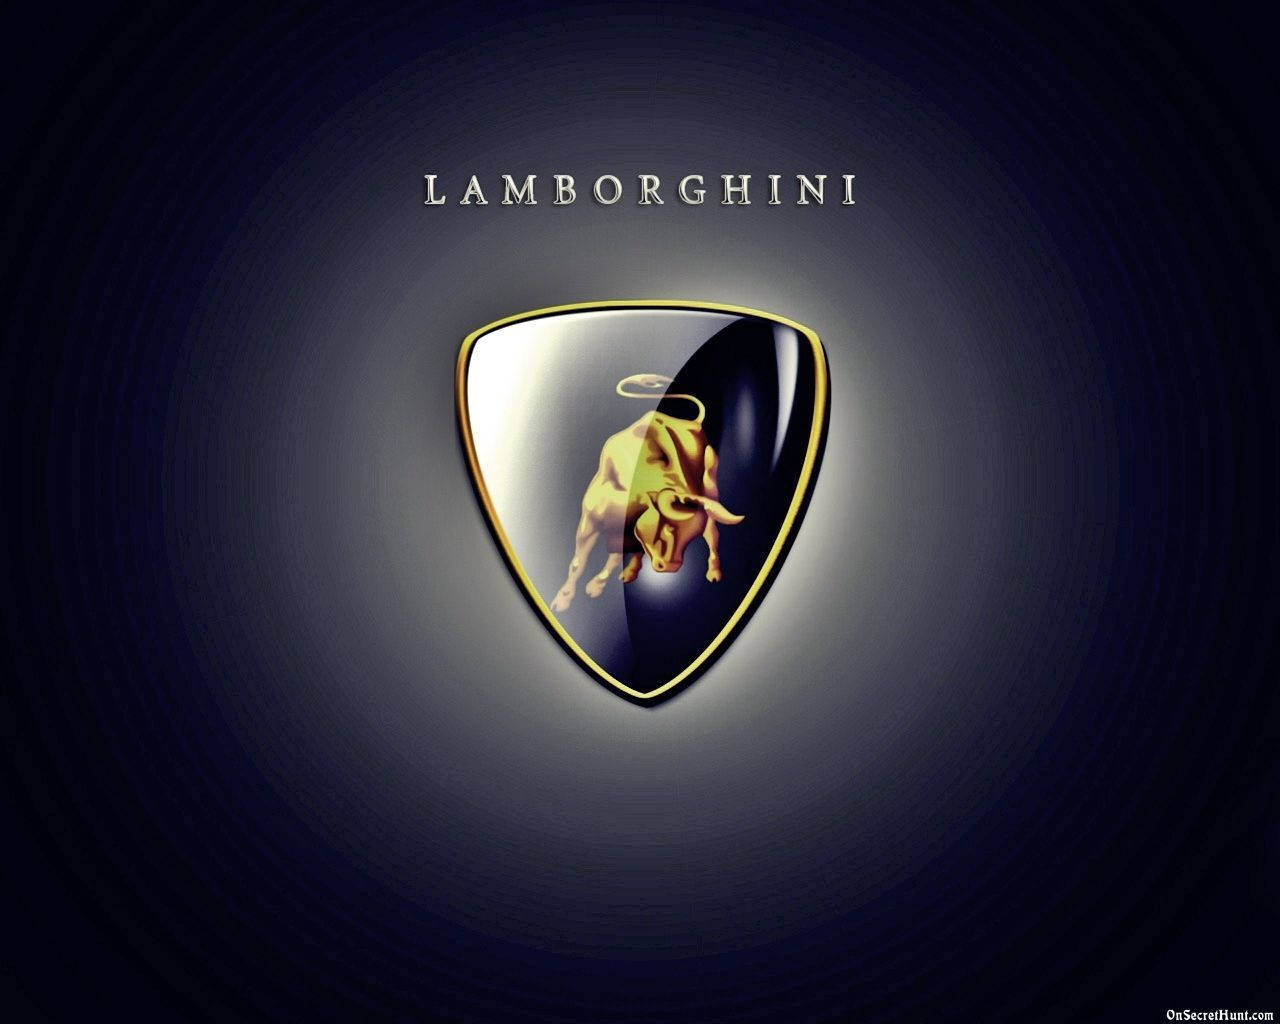 Lamborghini Logo in Dark Blue Wallpaper